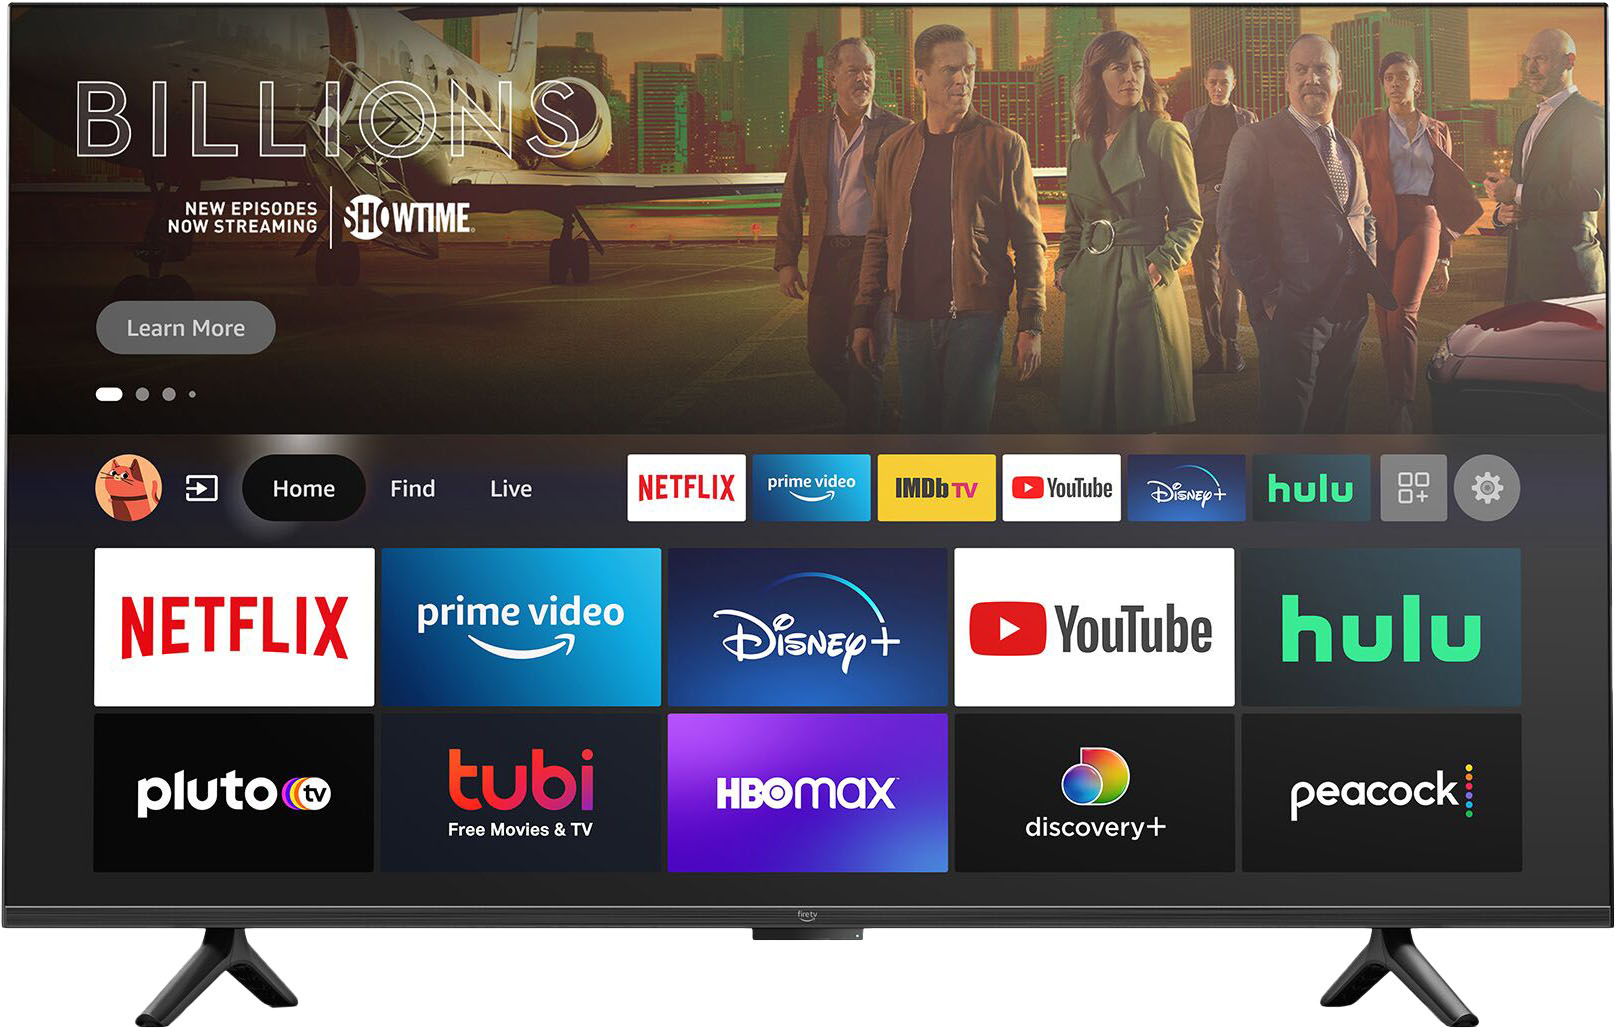 Amazon 43" Class Omni Series 4K UHD Smart Fire TV hands-free with Alexa $240 + Free Shipping